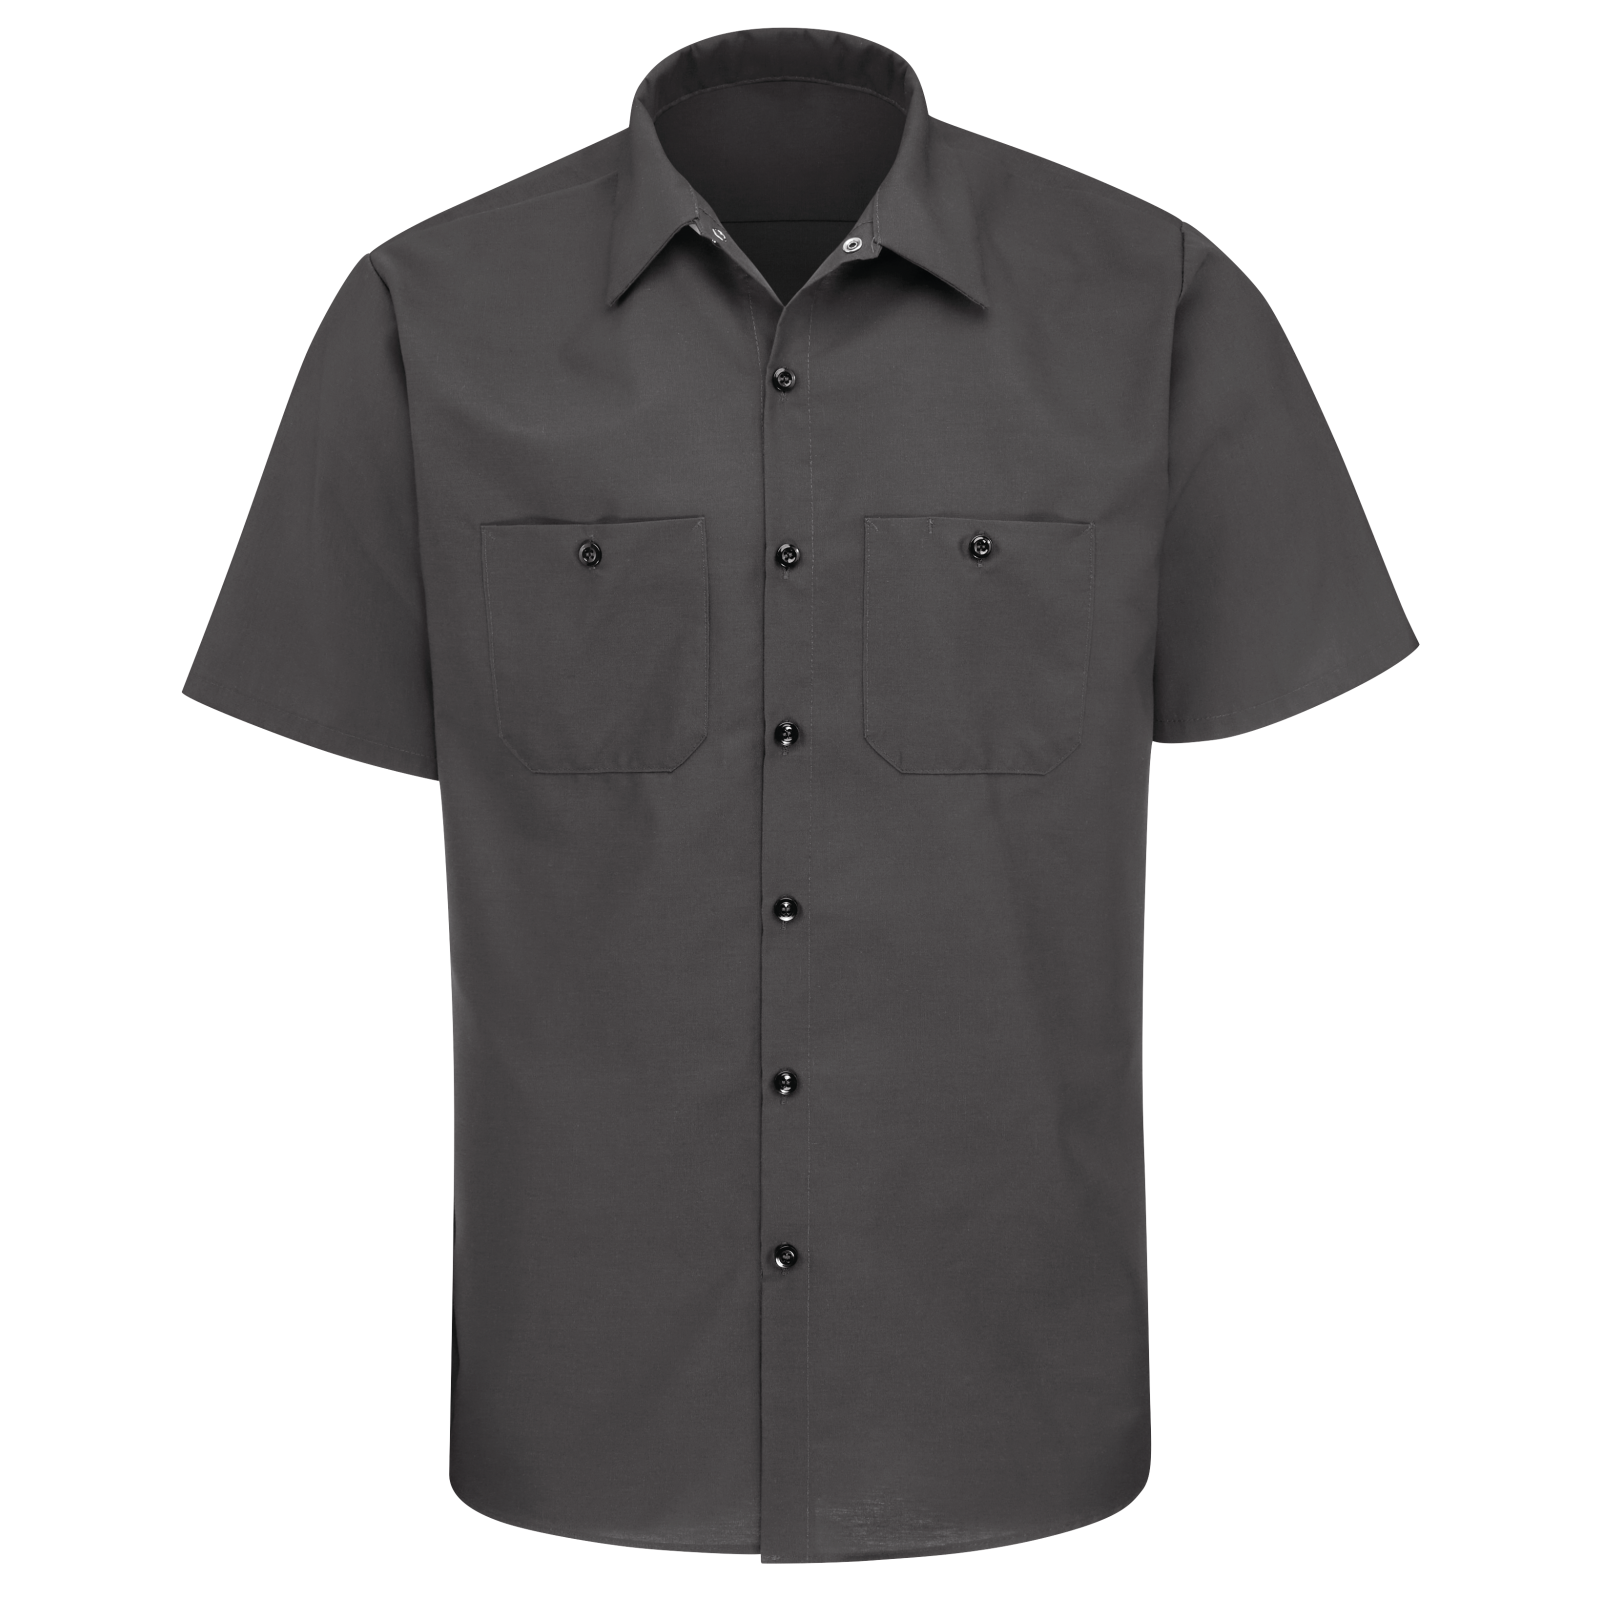 Mens shirt Work uniform small medium large XL 2x 5x blue black white tan NEW 